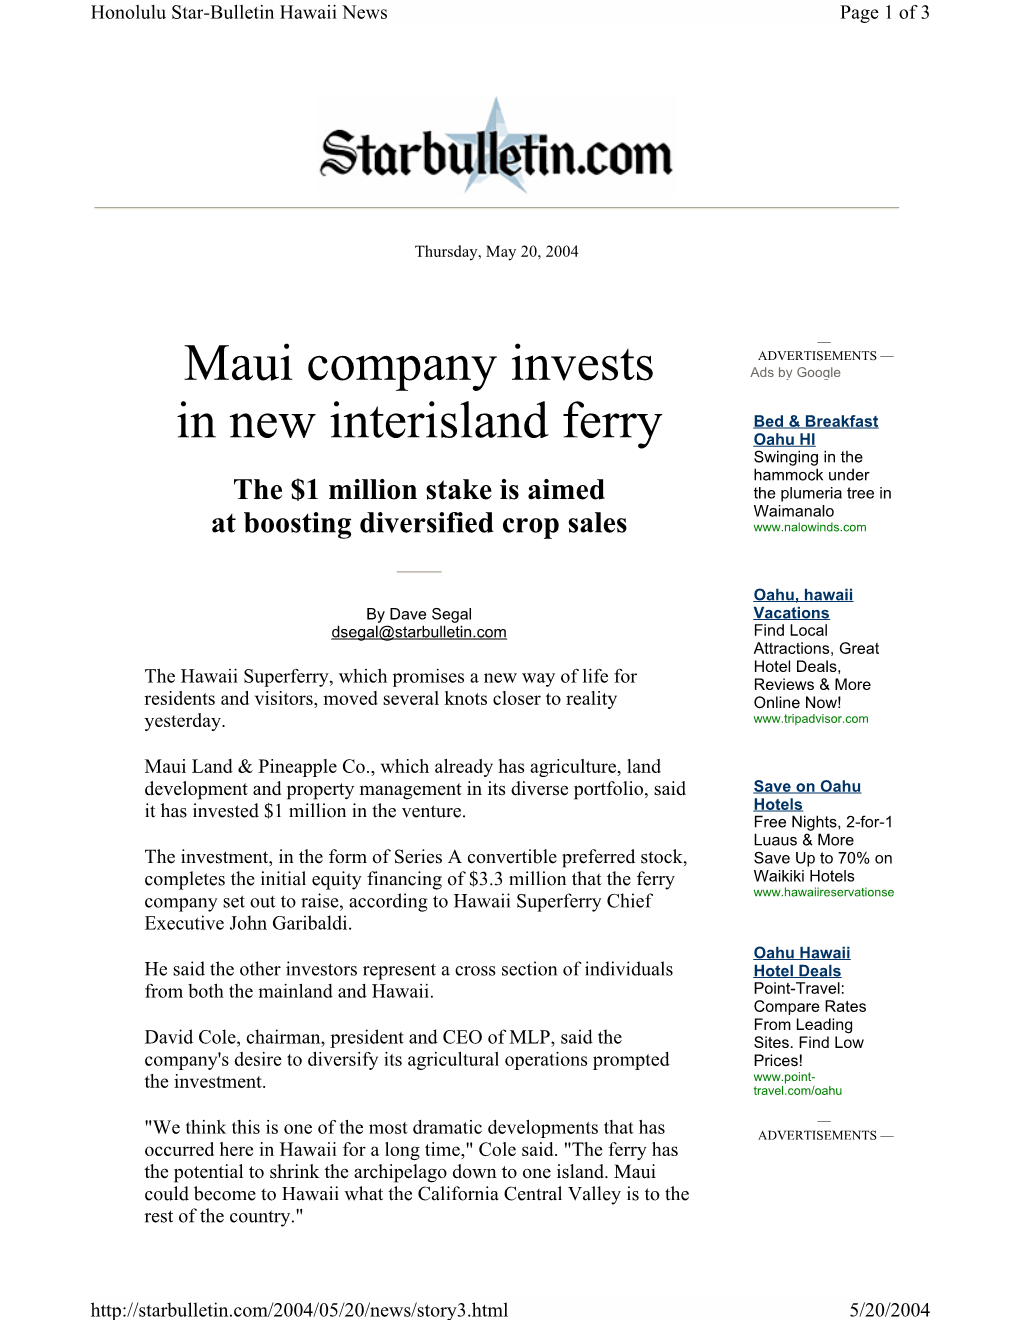 Maui Company Invests in New Interisland Ferry